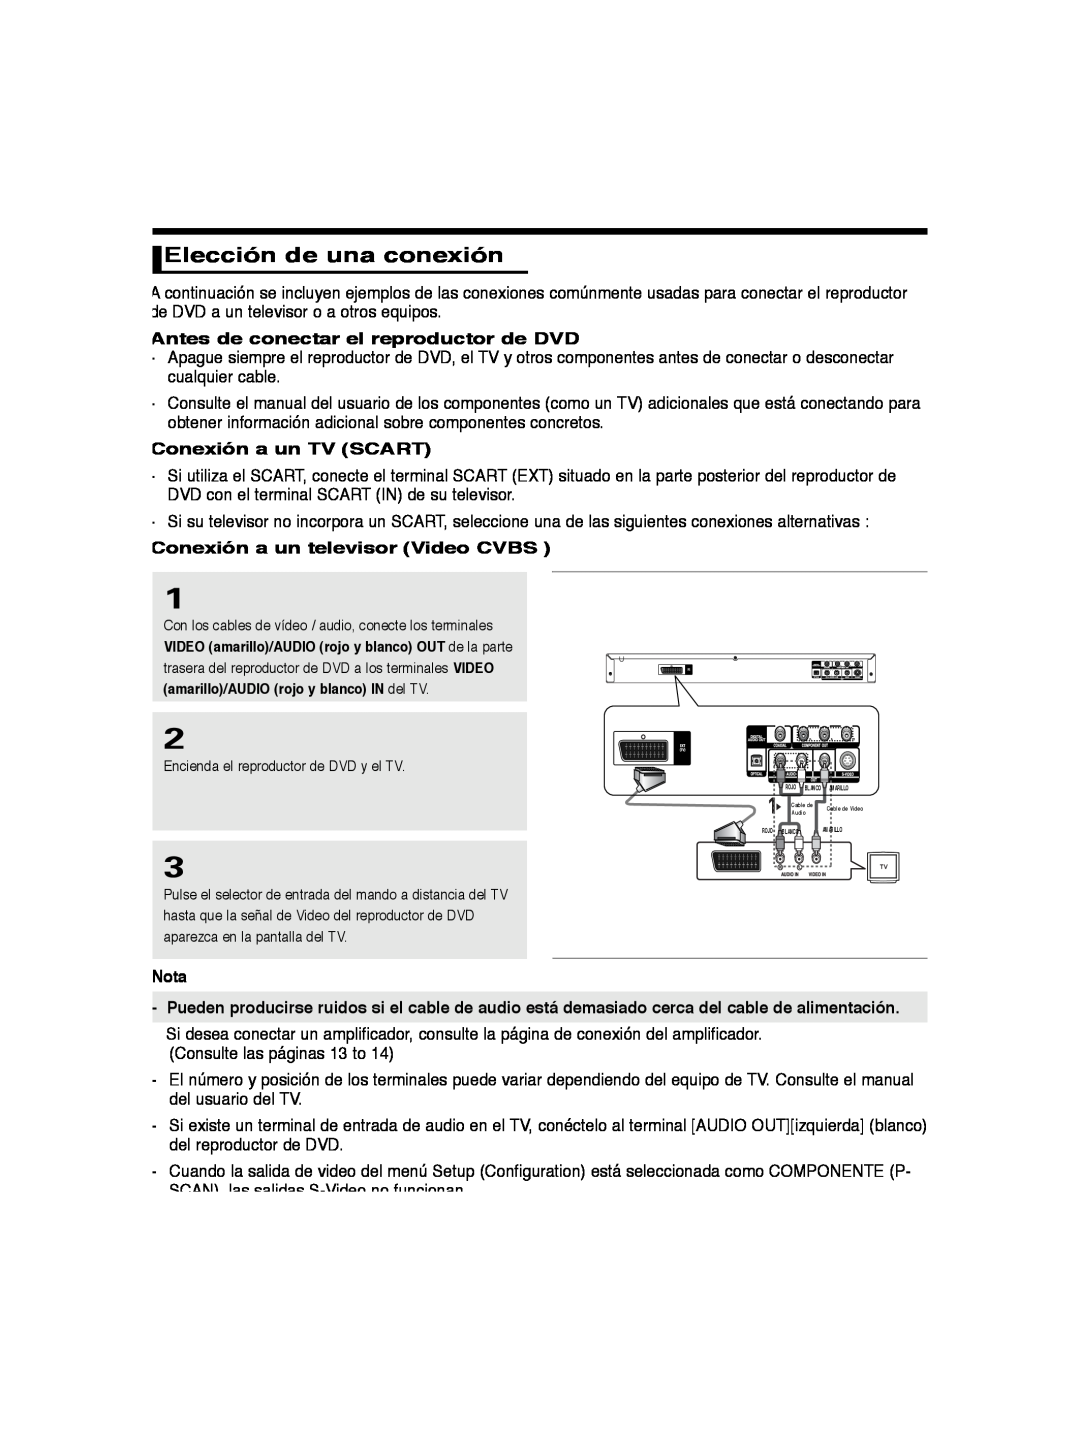 Samsung DVD-P260K/AFR Elección de una conexión, Antes de conectar el reproductor de DVD, Conexión a un TV SCART, Nota 